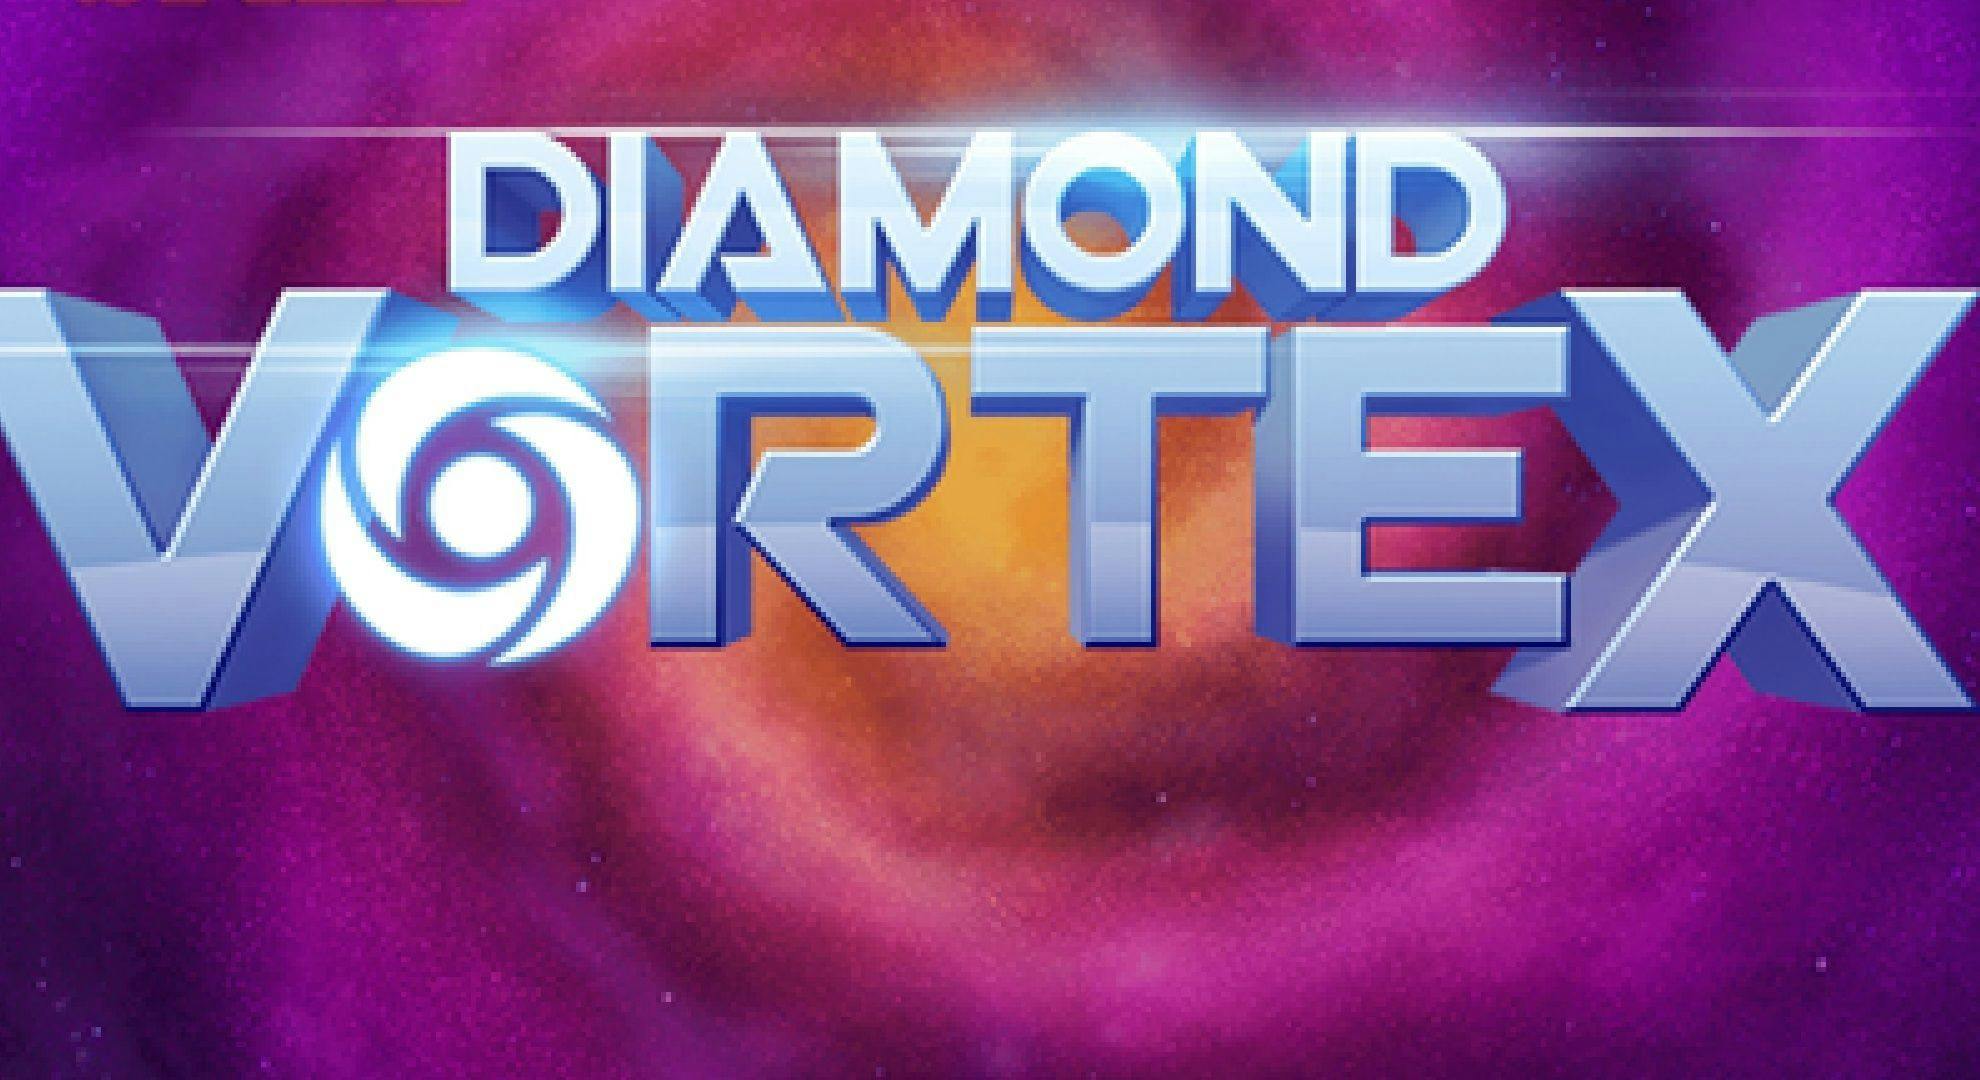 Diamond Vortex Slot Online Free Play